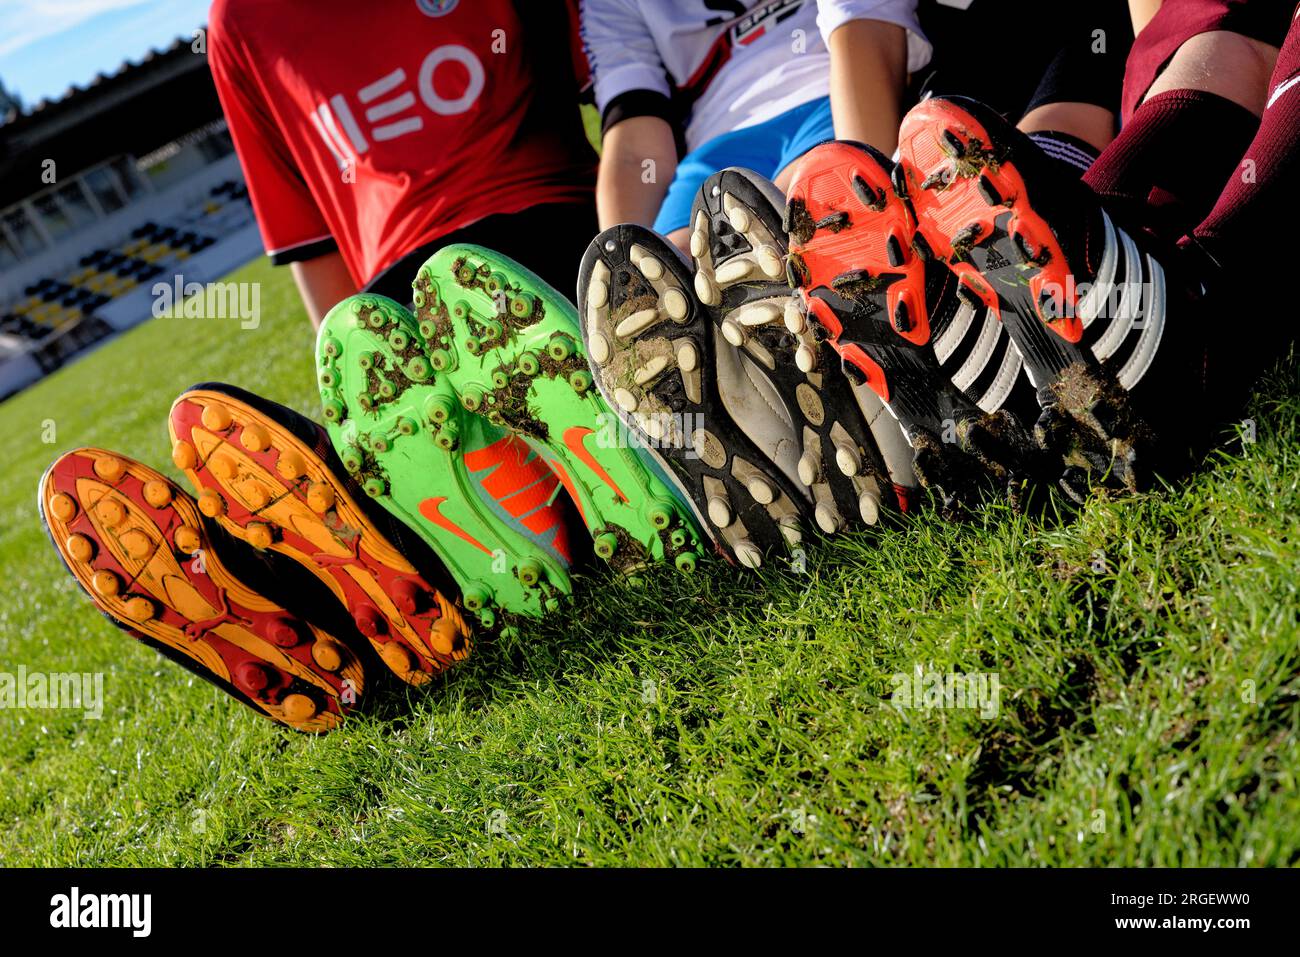 Fermé avec des enfants portant des chaussures de football ou de football sports de jeu dans la municipalité d'Alcanena, Portugal. Stade municipal Joaquim Maria Baptista - 29 Banque D'Images